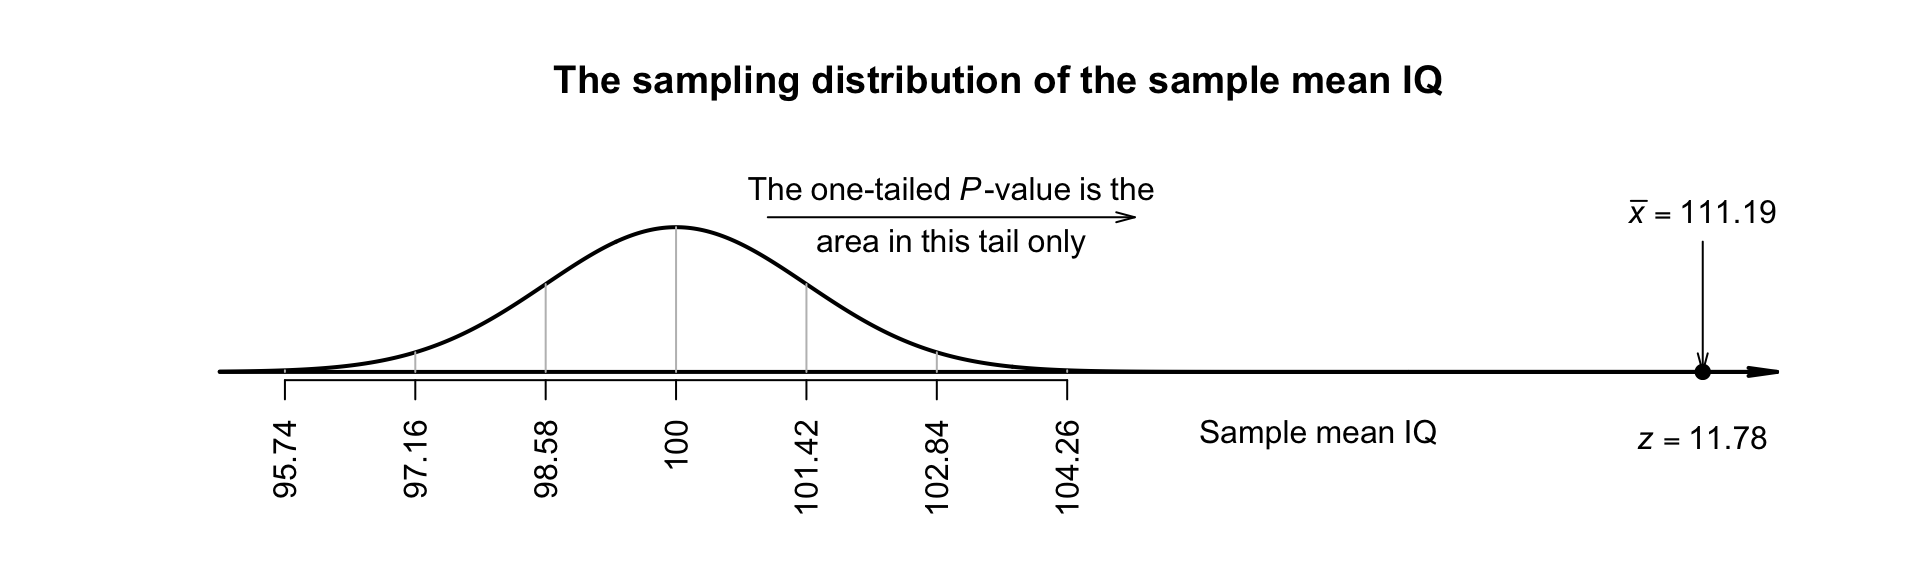 The sampling distribution for the IQ data